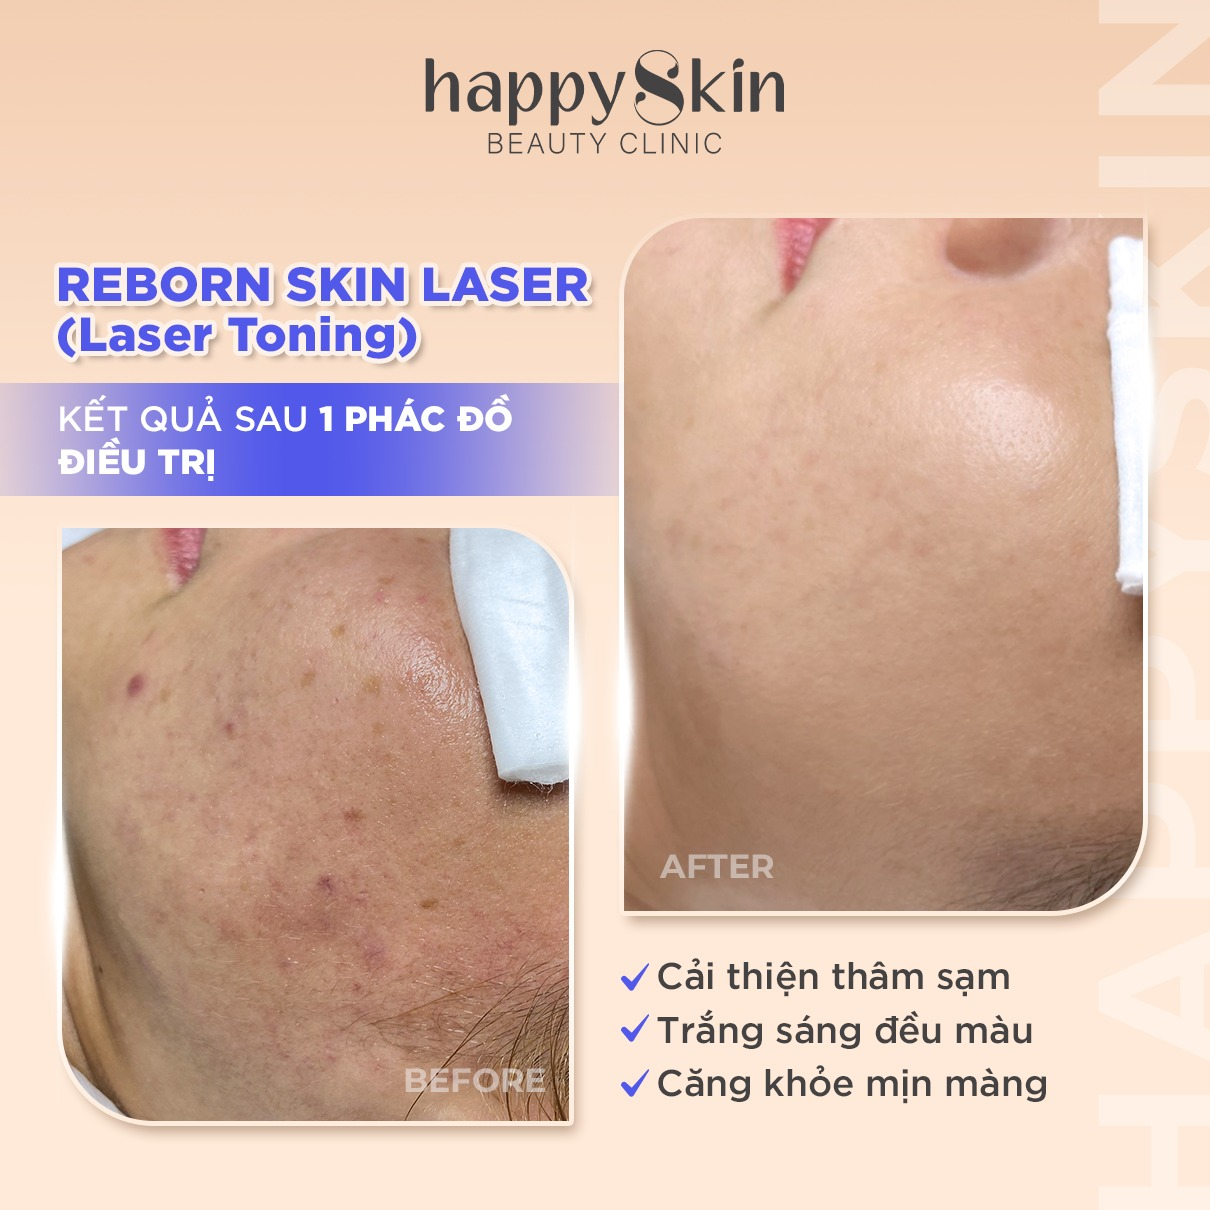 Hiệu quả sau khi sử dụng Liệu trình Reborn Skin Laser tại HappySkin Beauty Clinic